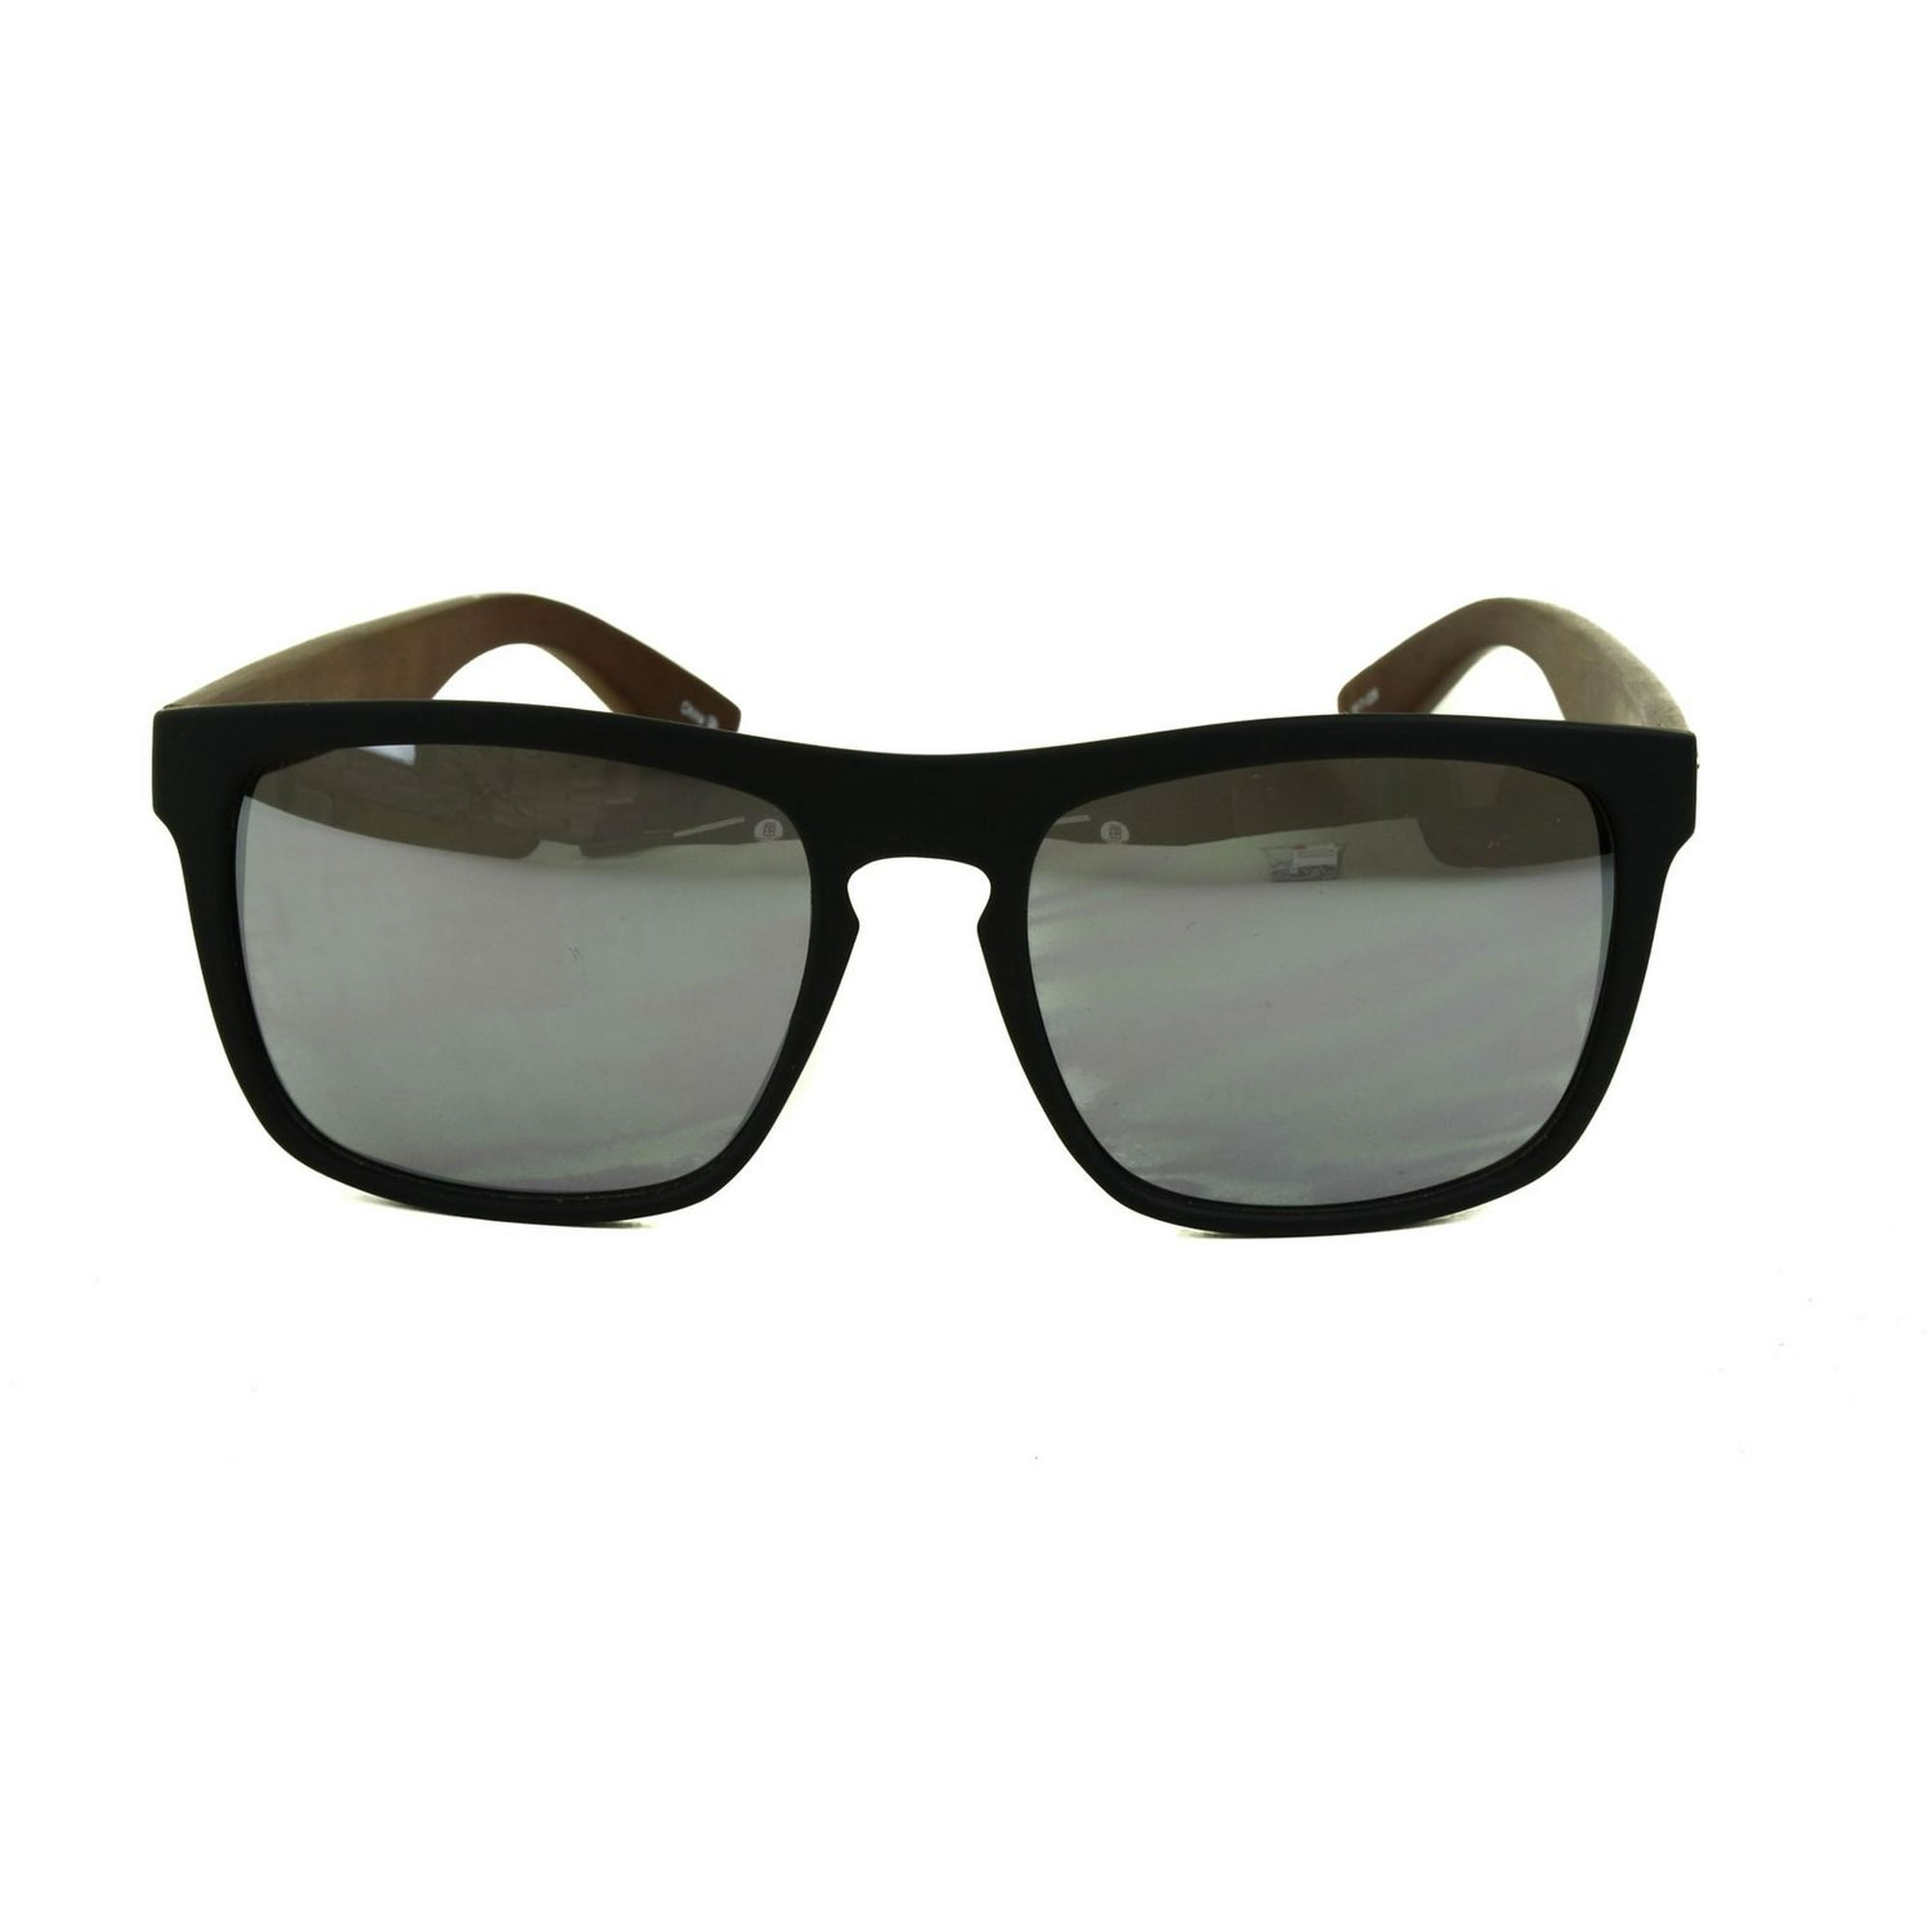 George Mens Black with Dark Wood Square Sunglasses 